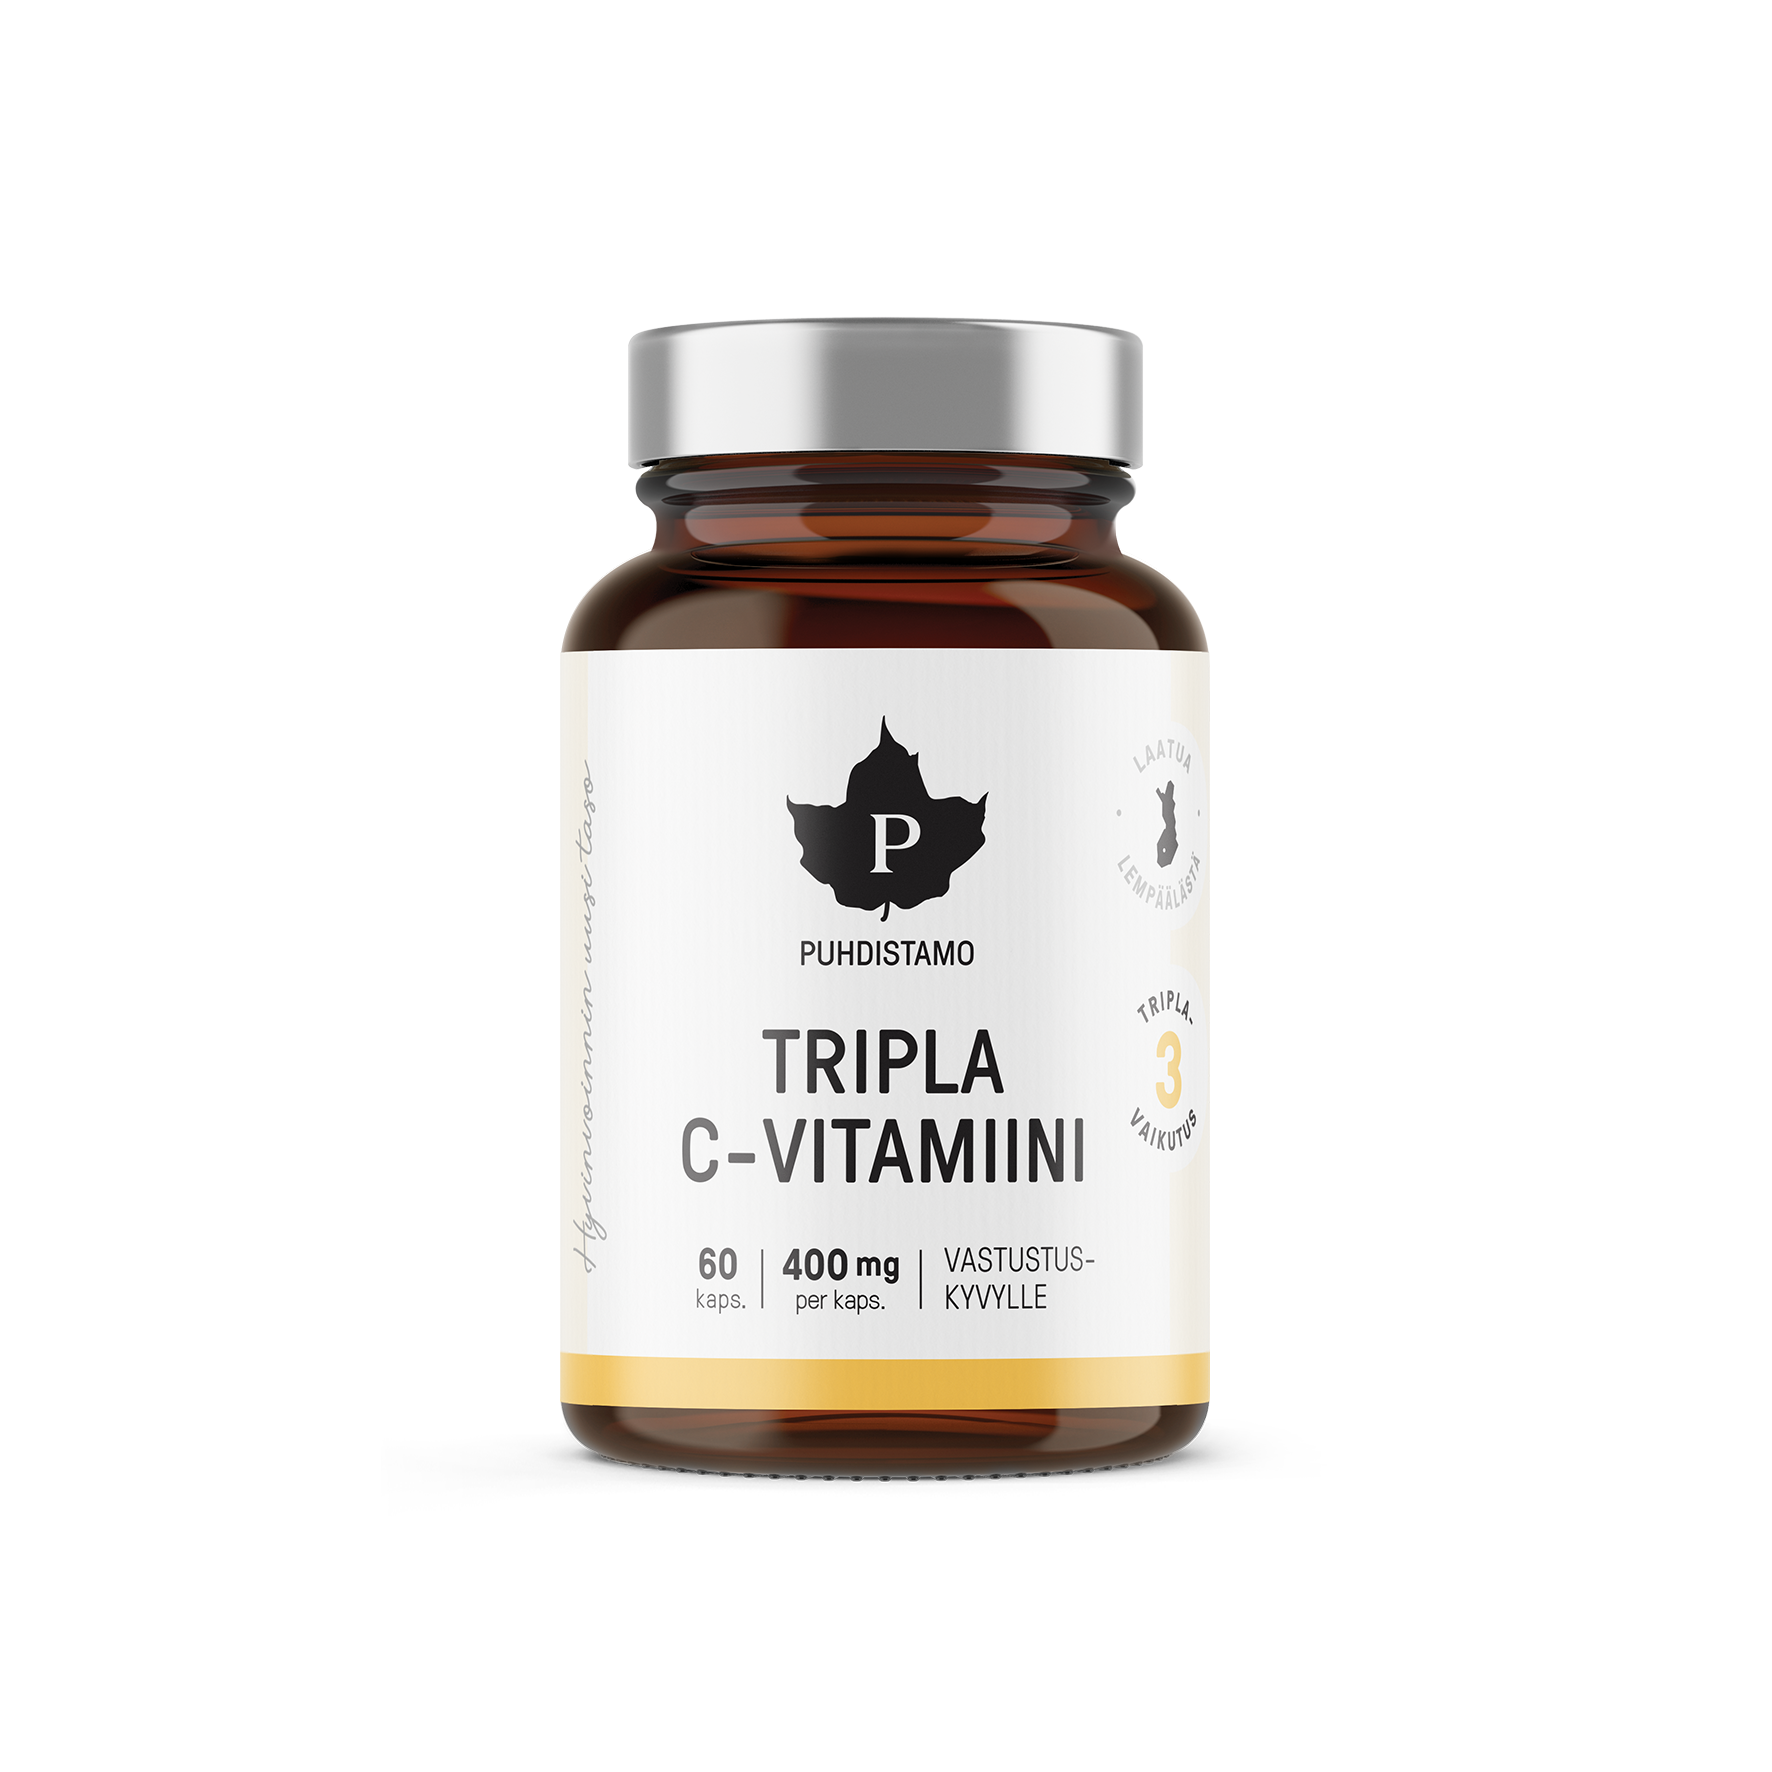 Puhdistamo Tripla C-vitamiini 60 kaps